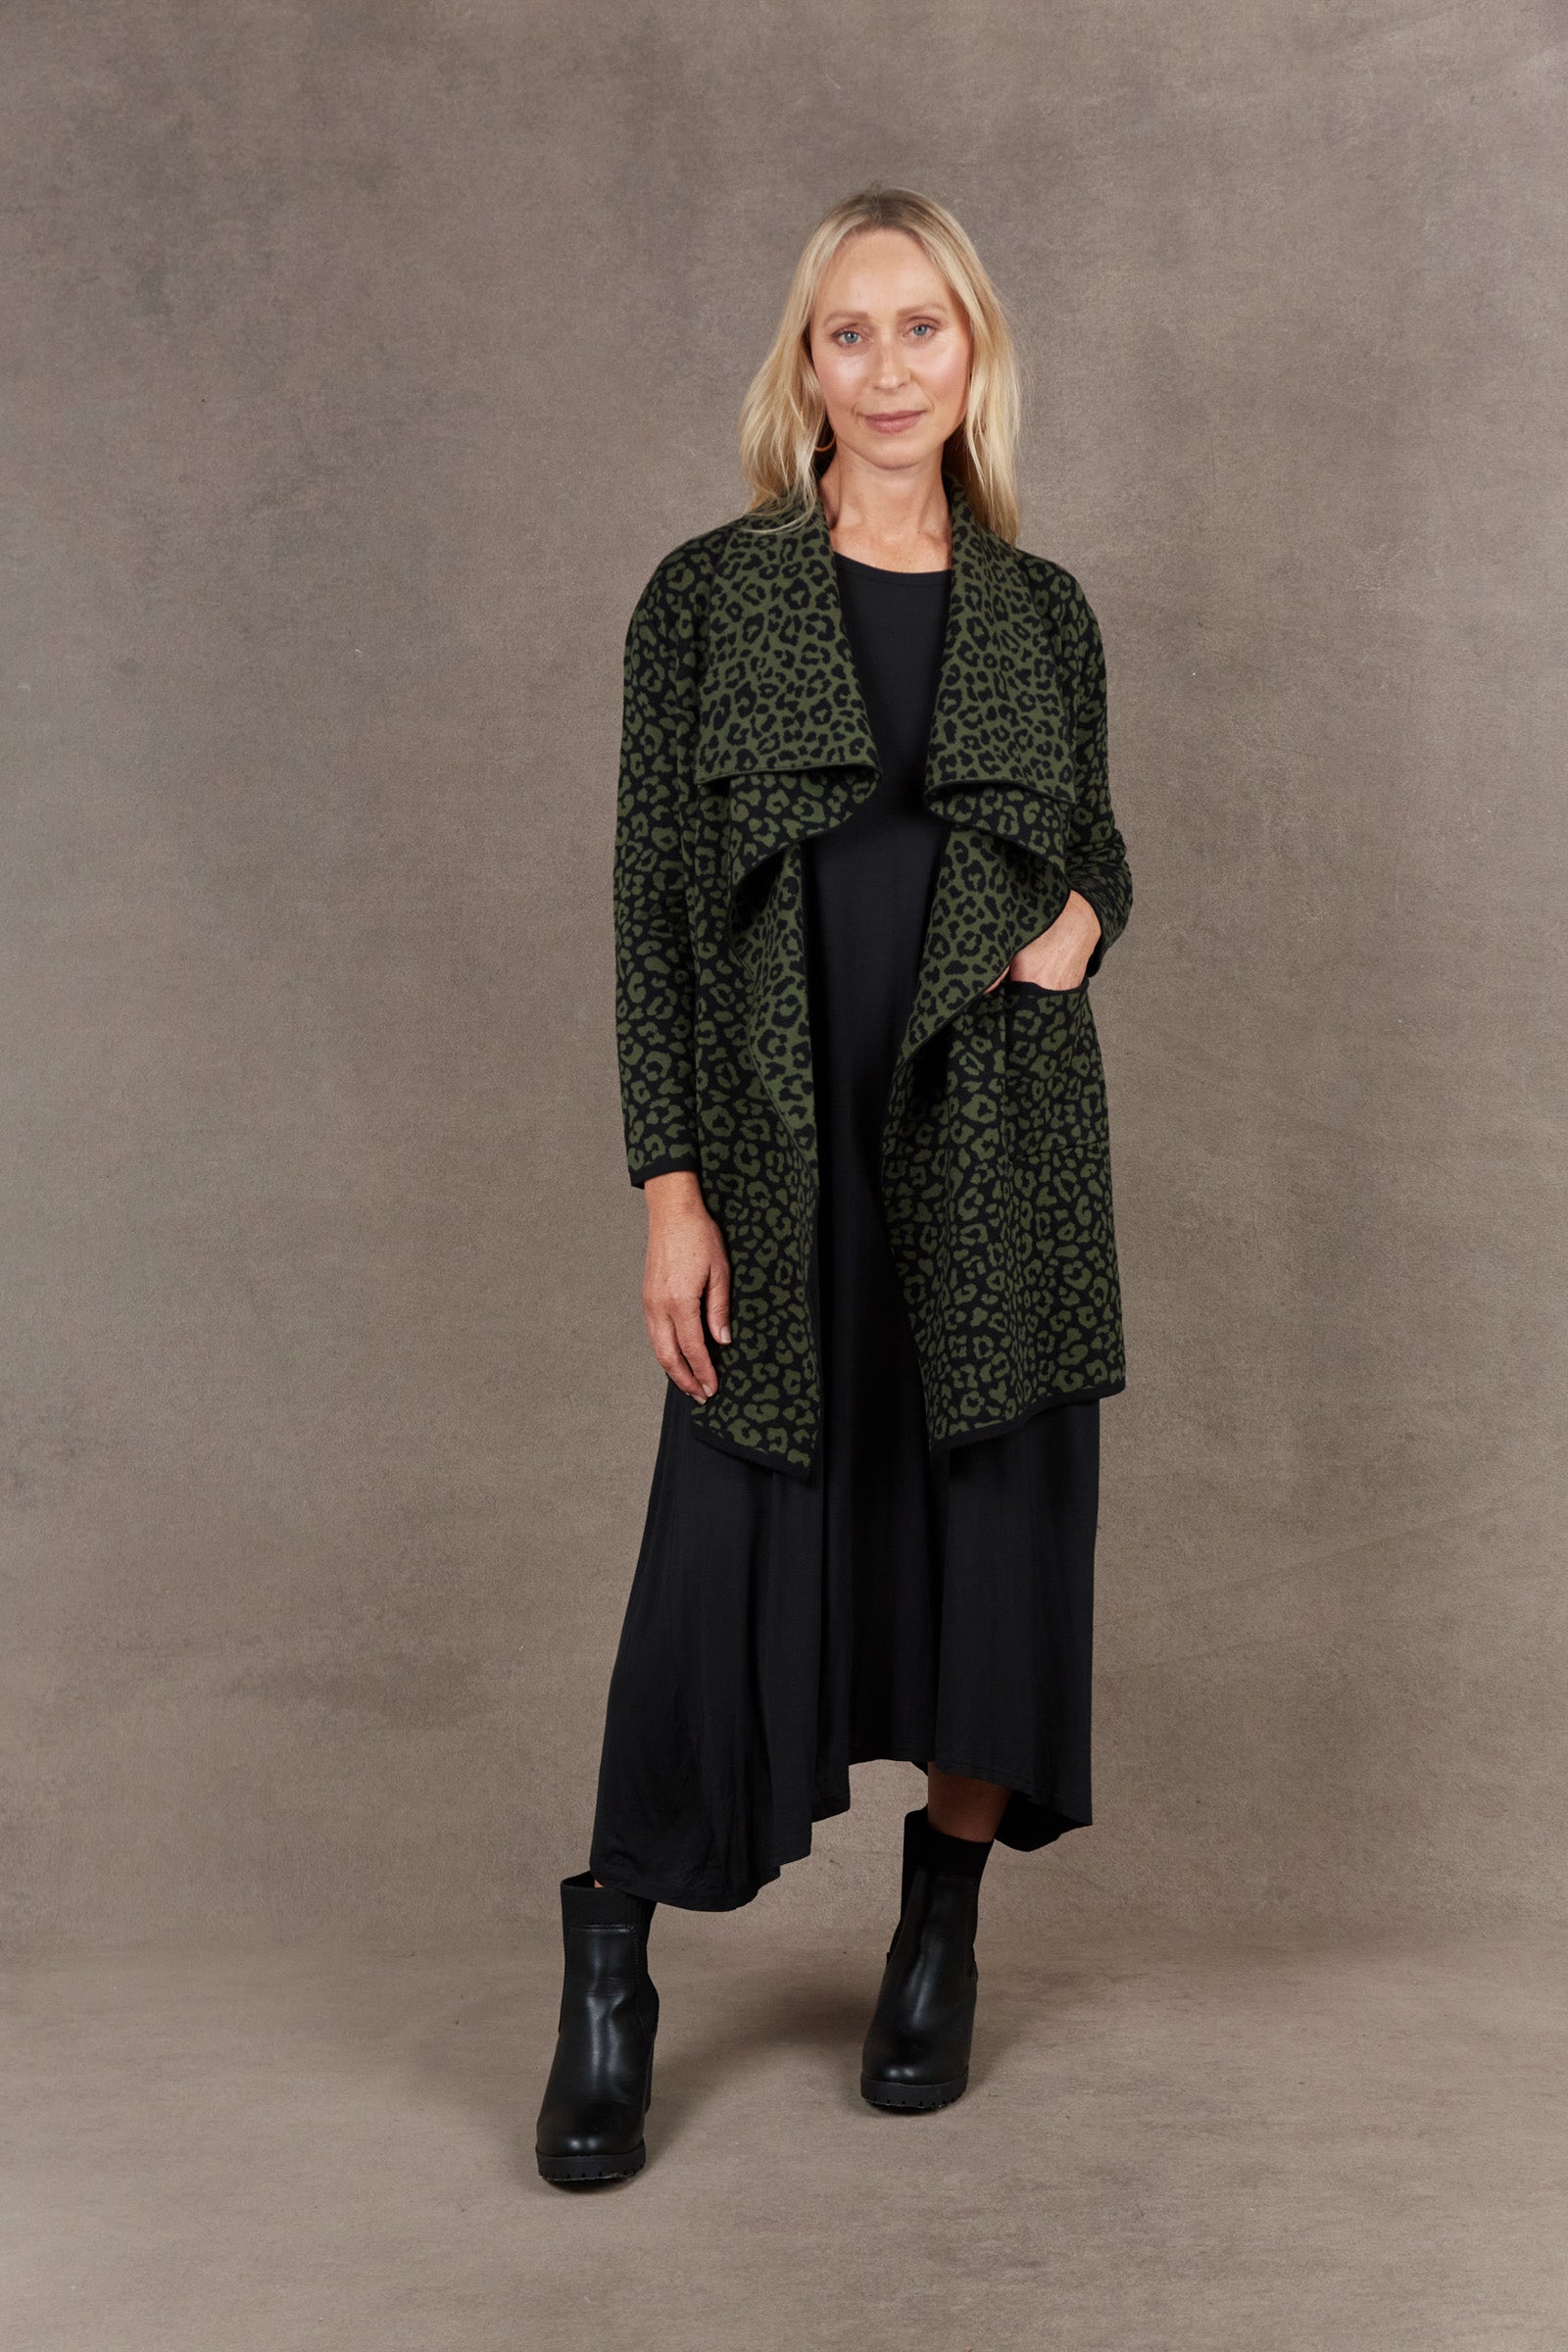 Pilbara Waterfall Cardigan - Olive - eb&ive Clothing - Knit Cardigan One Size